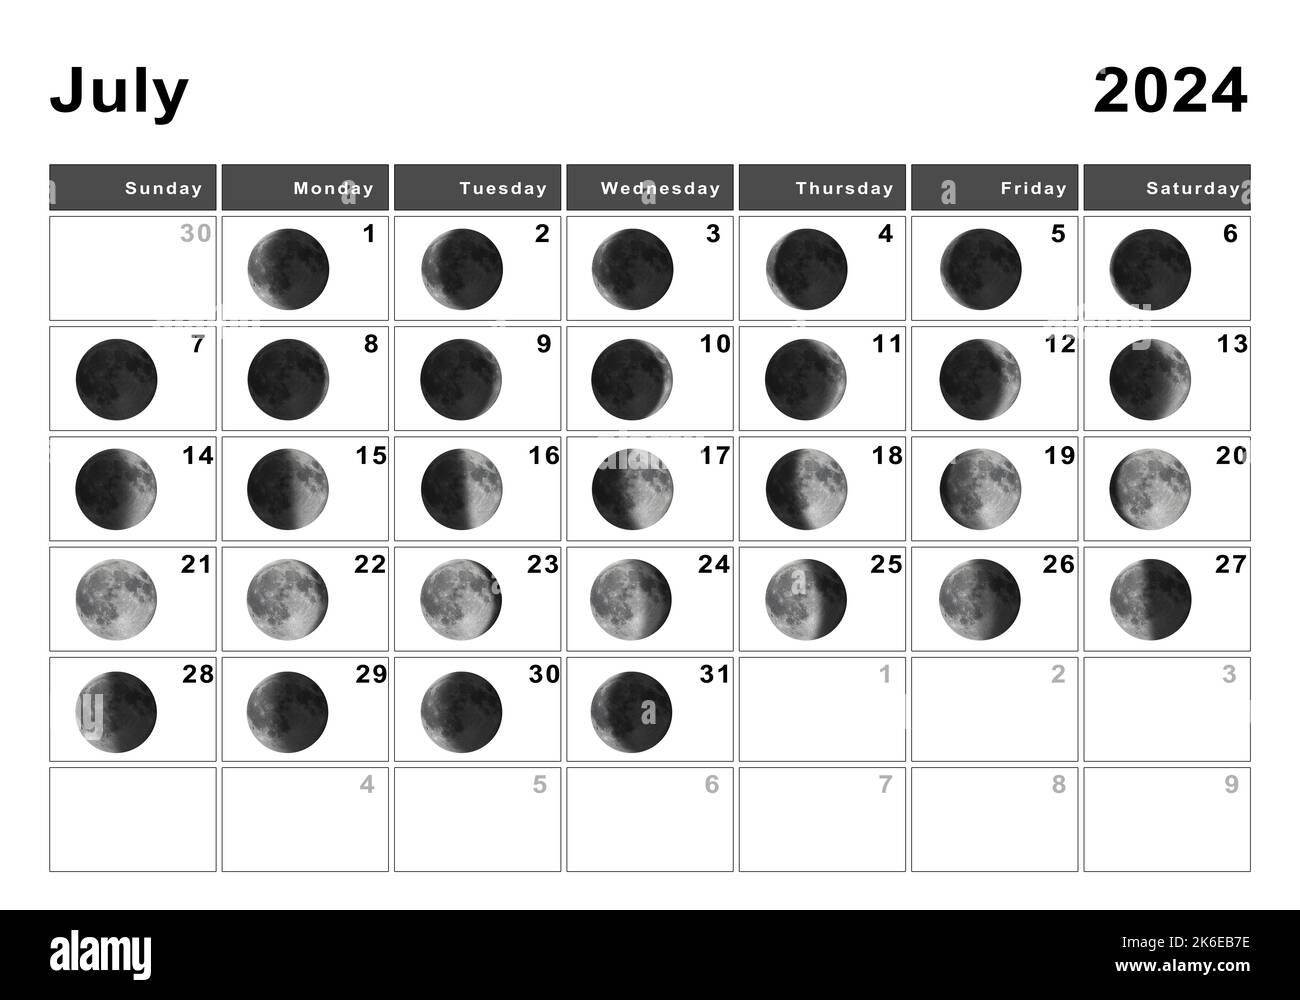 July 2024 Lunar Calendar, Moon Cycles, Moon Phases Stock Photo - Alamy | July Moon Phases Calendar 2024